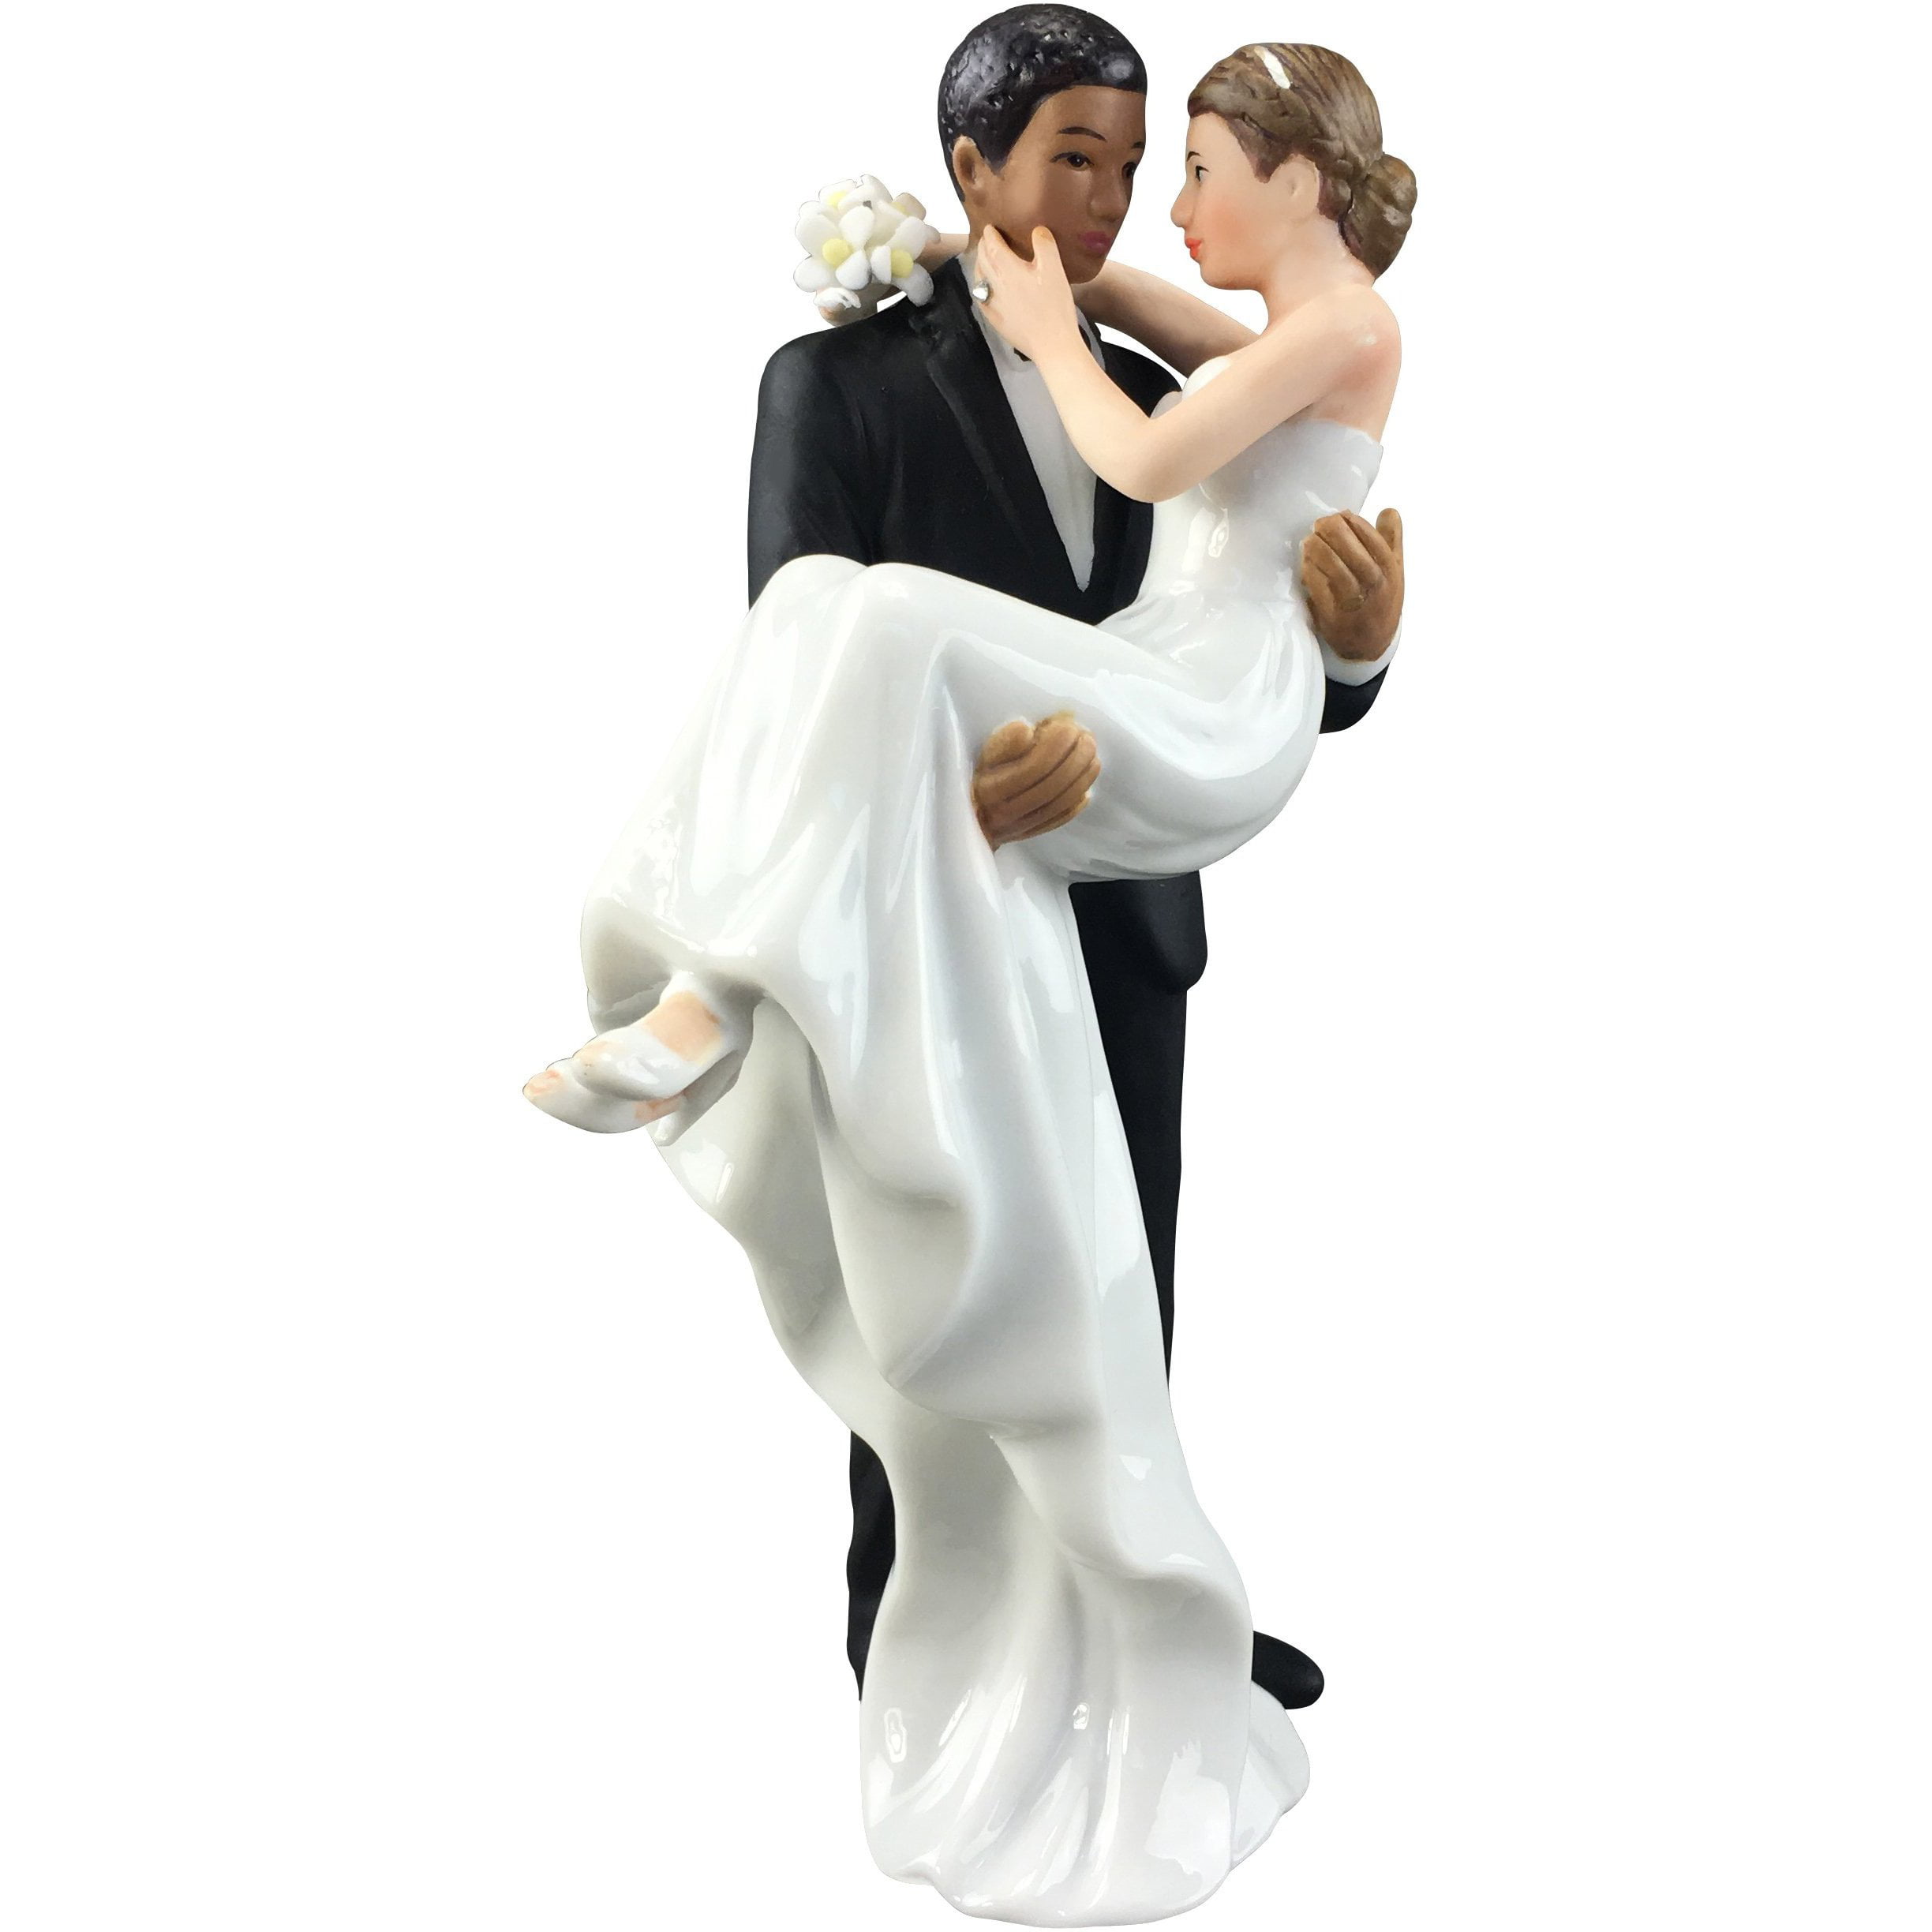 Groom Dragging Bride by Ankle Fun Decoration Bride & Groom Wedding Cake Topper 